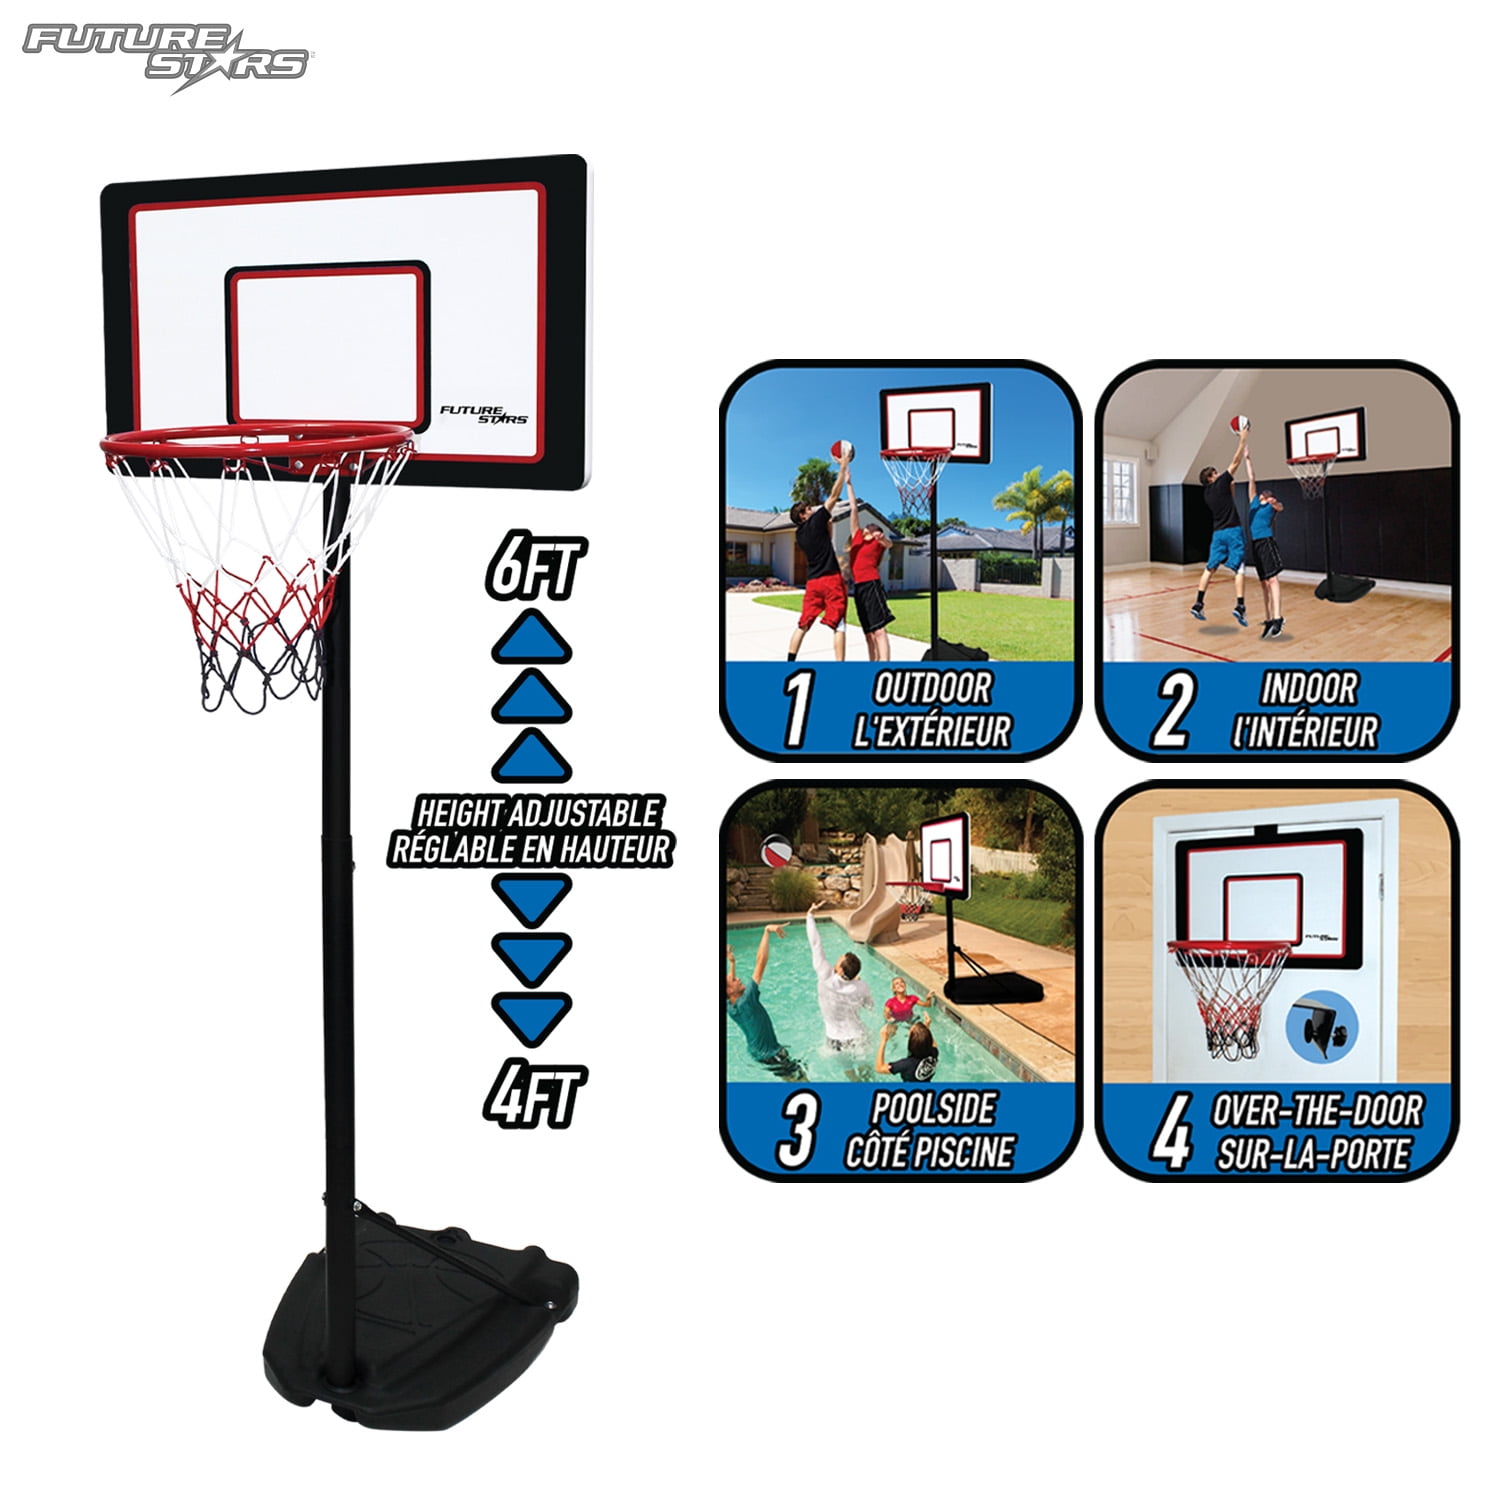 Details about   Future Stars 4-in-1 Junior Basketball Set Over the Door/Indoor/Outdoor/Pool-Side 